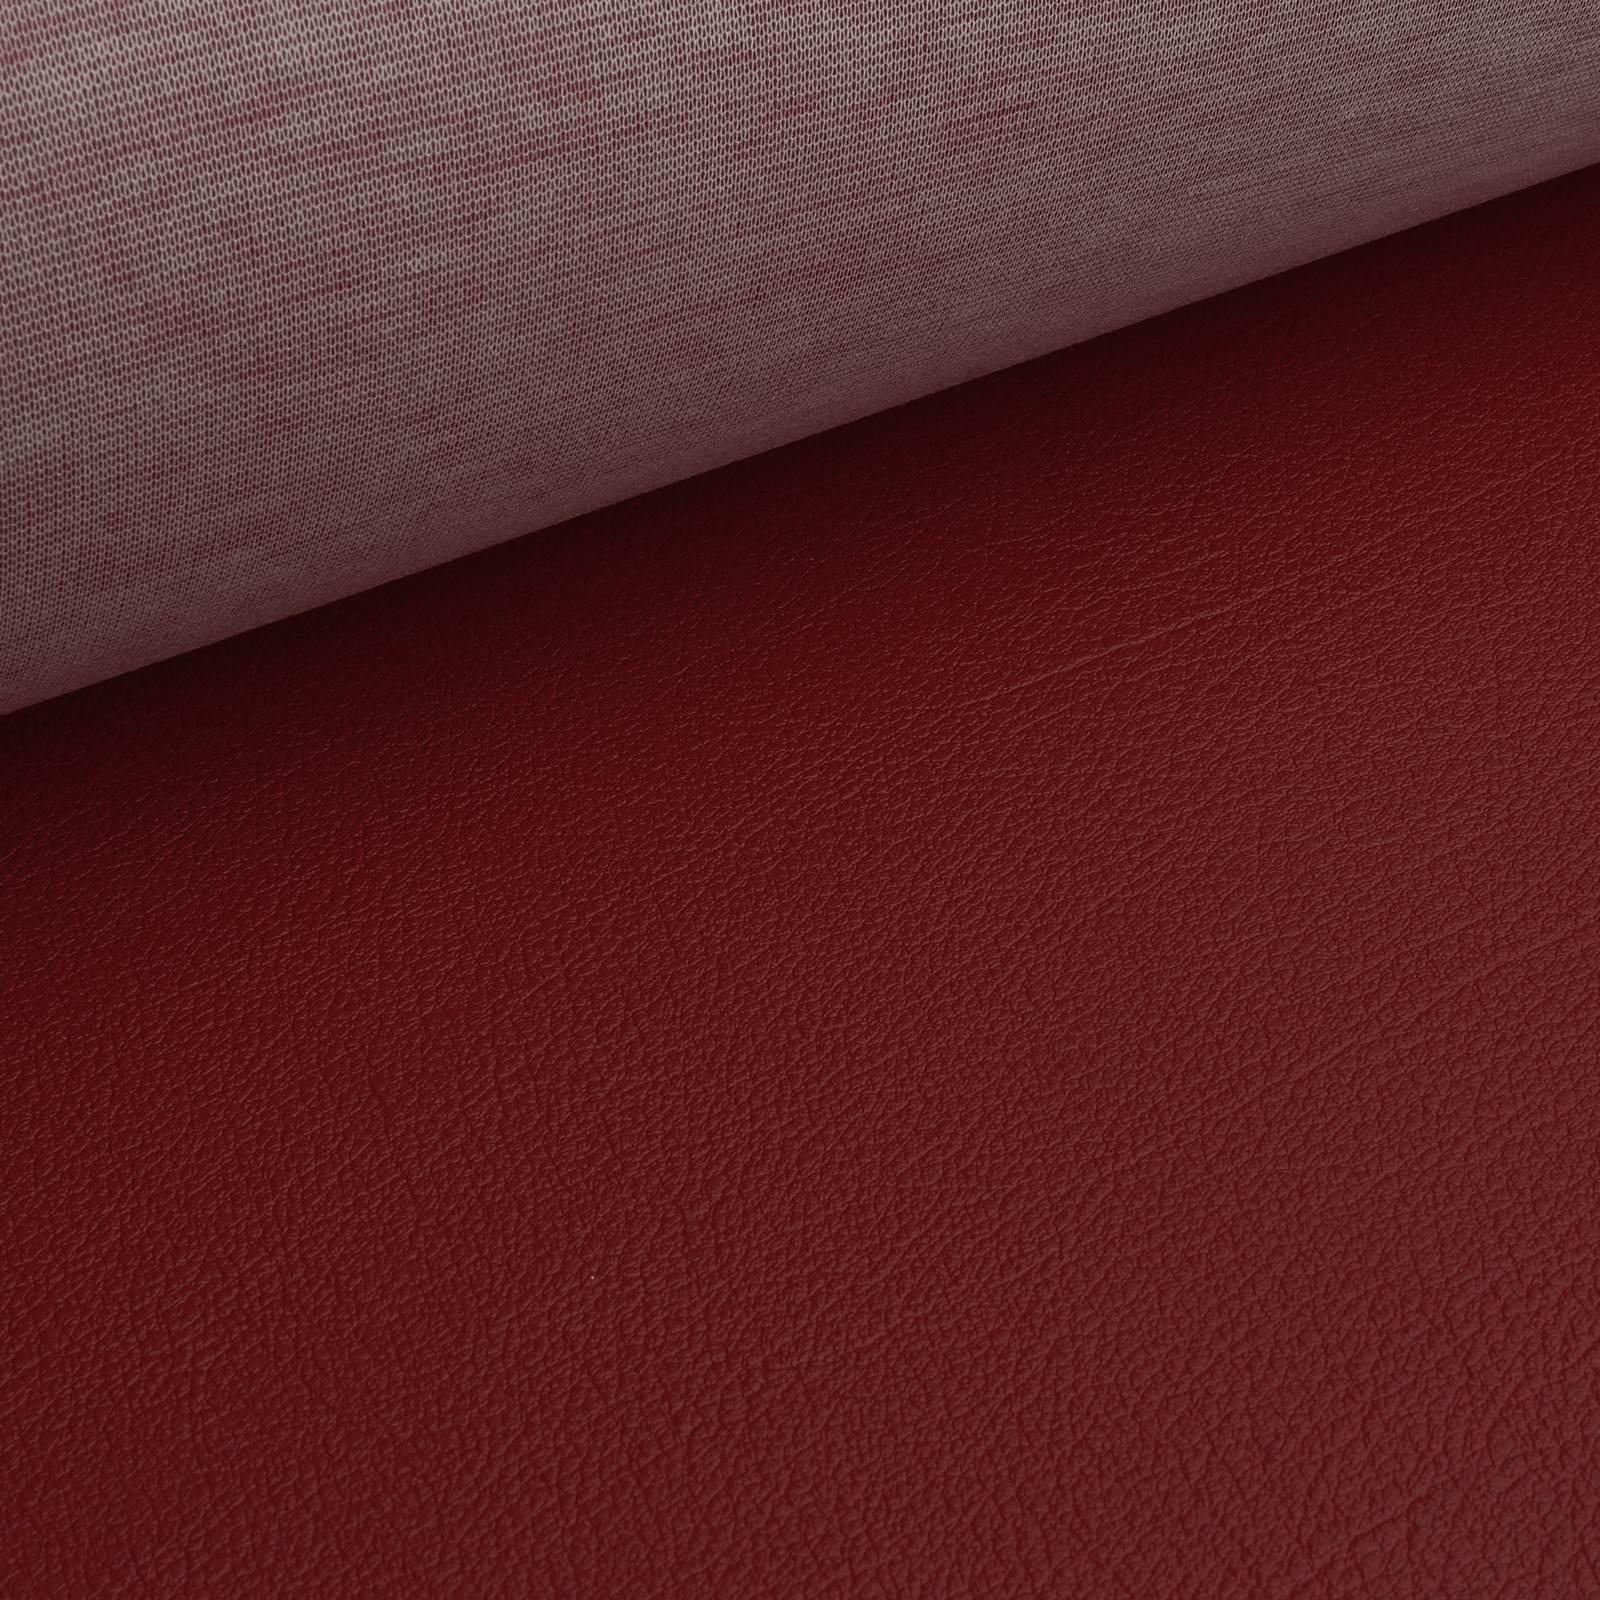 Skytex imitation leather flame retardant B1 (dark red)